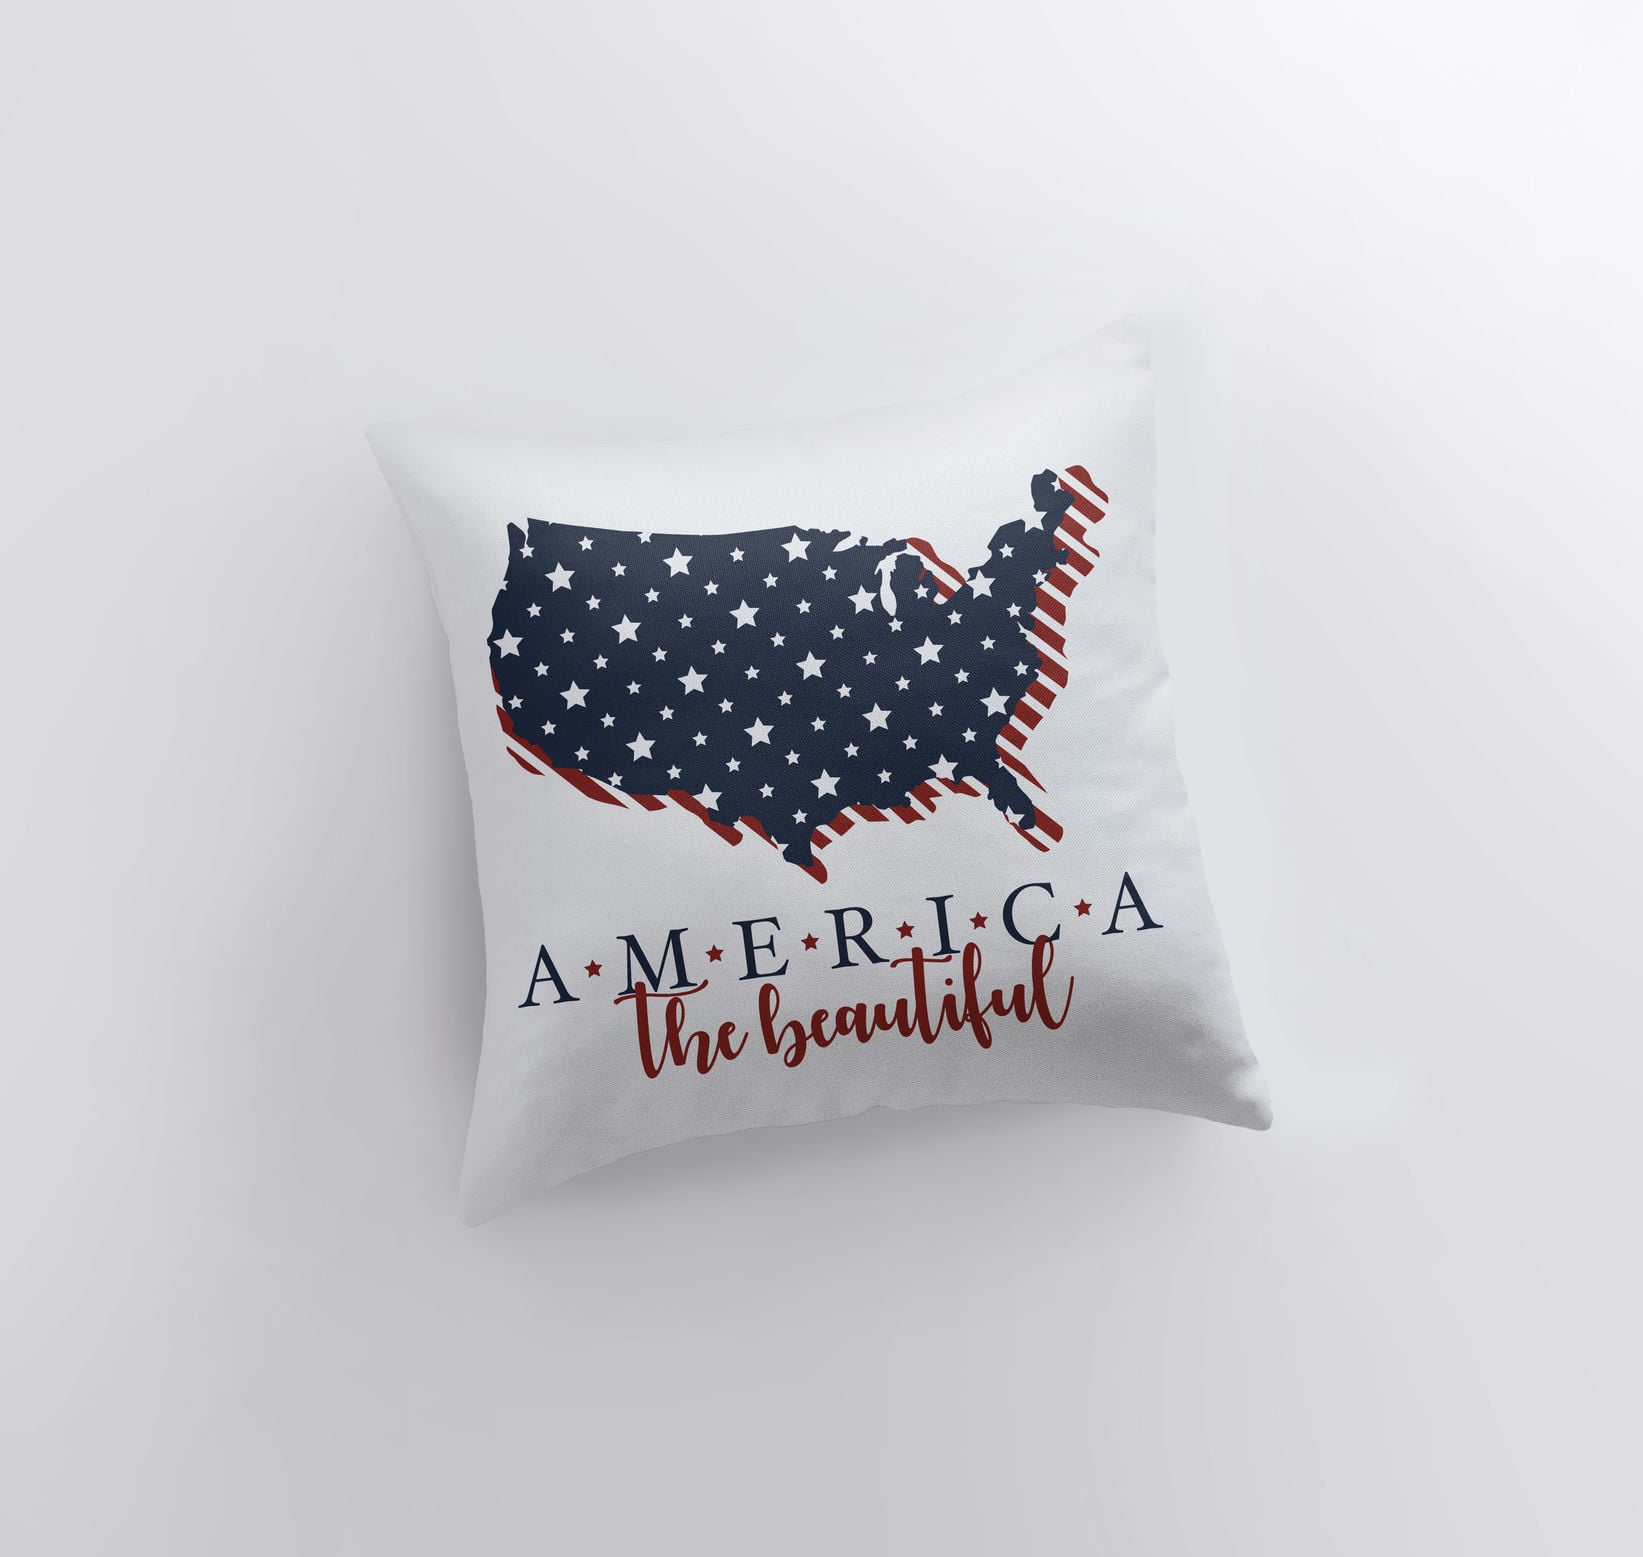 America the Beautiful | Pillow Cover | Memorial Gift | Throw Pillow |